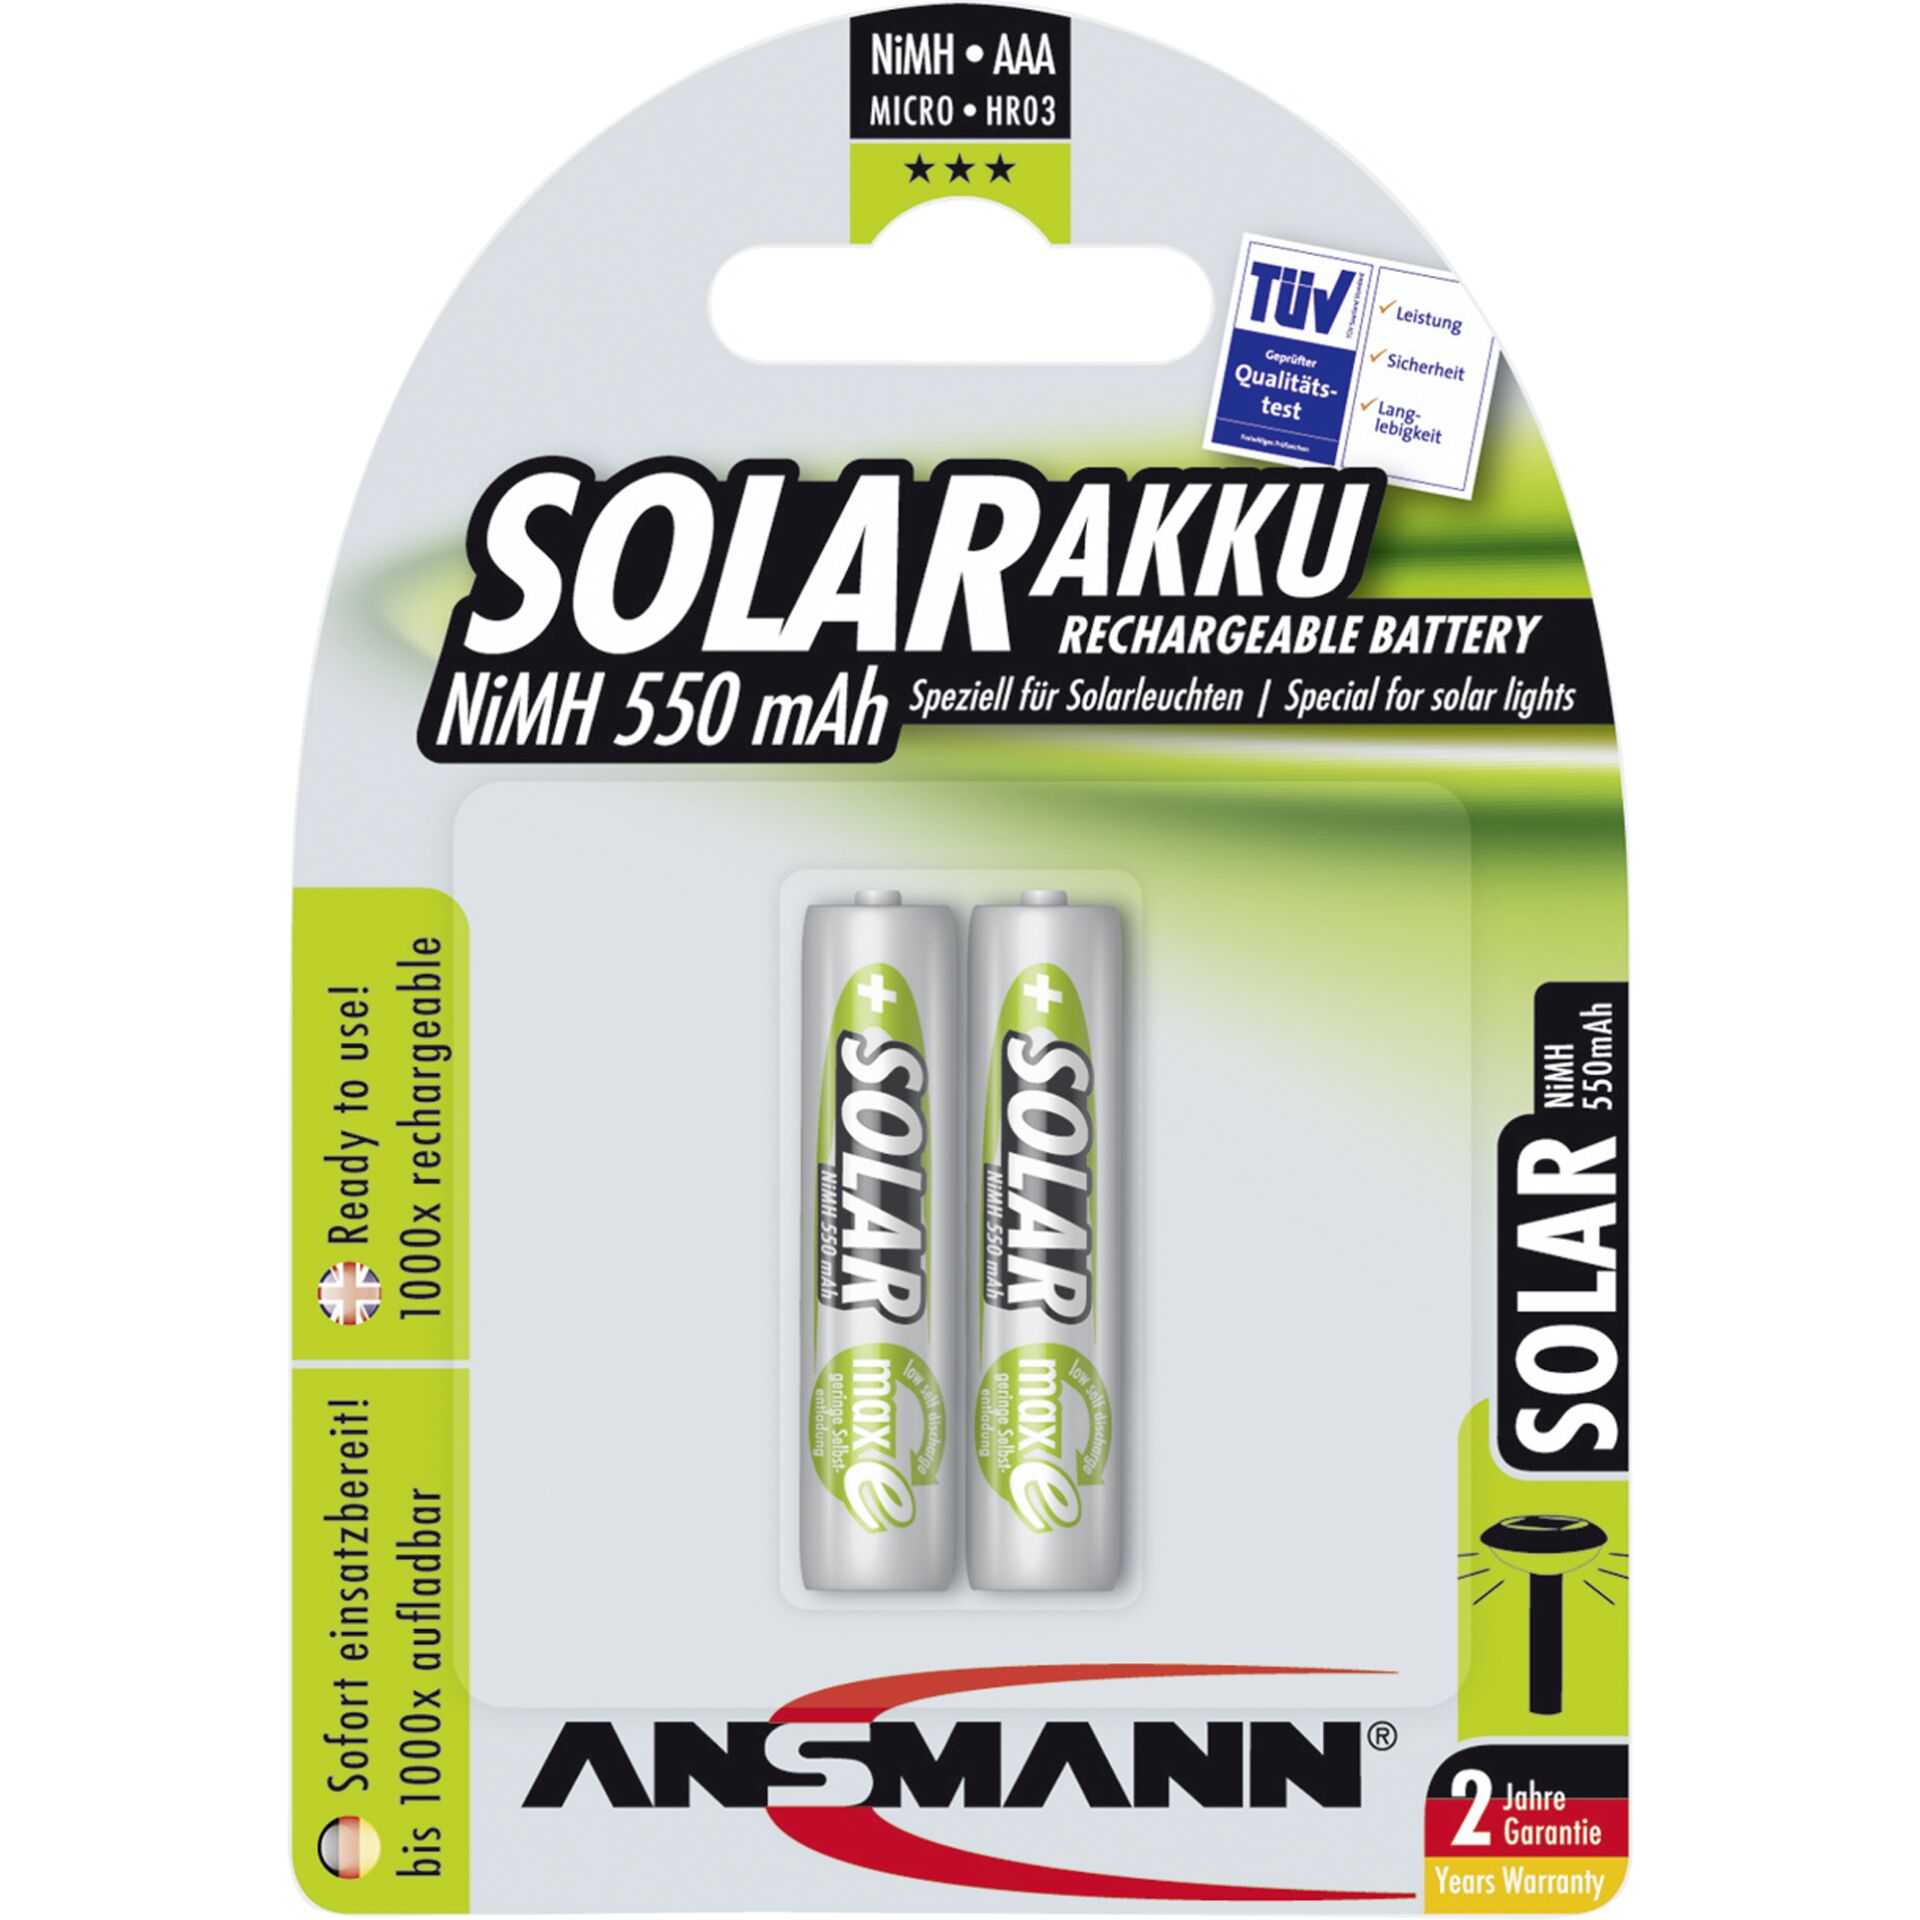 Ansmann Solar NiMH Akku Micro AAA 550mAh 2er Blister 